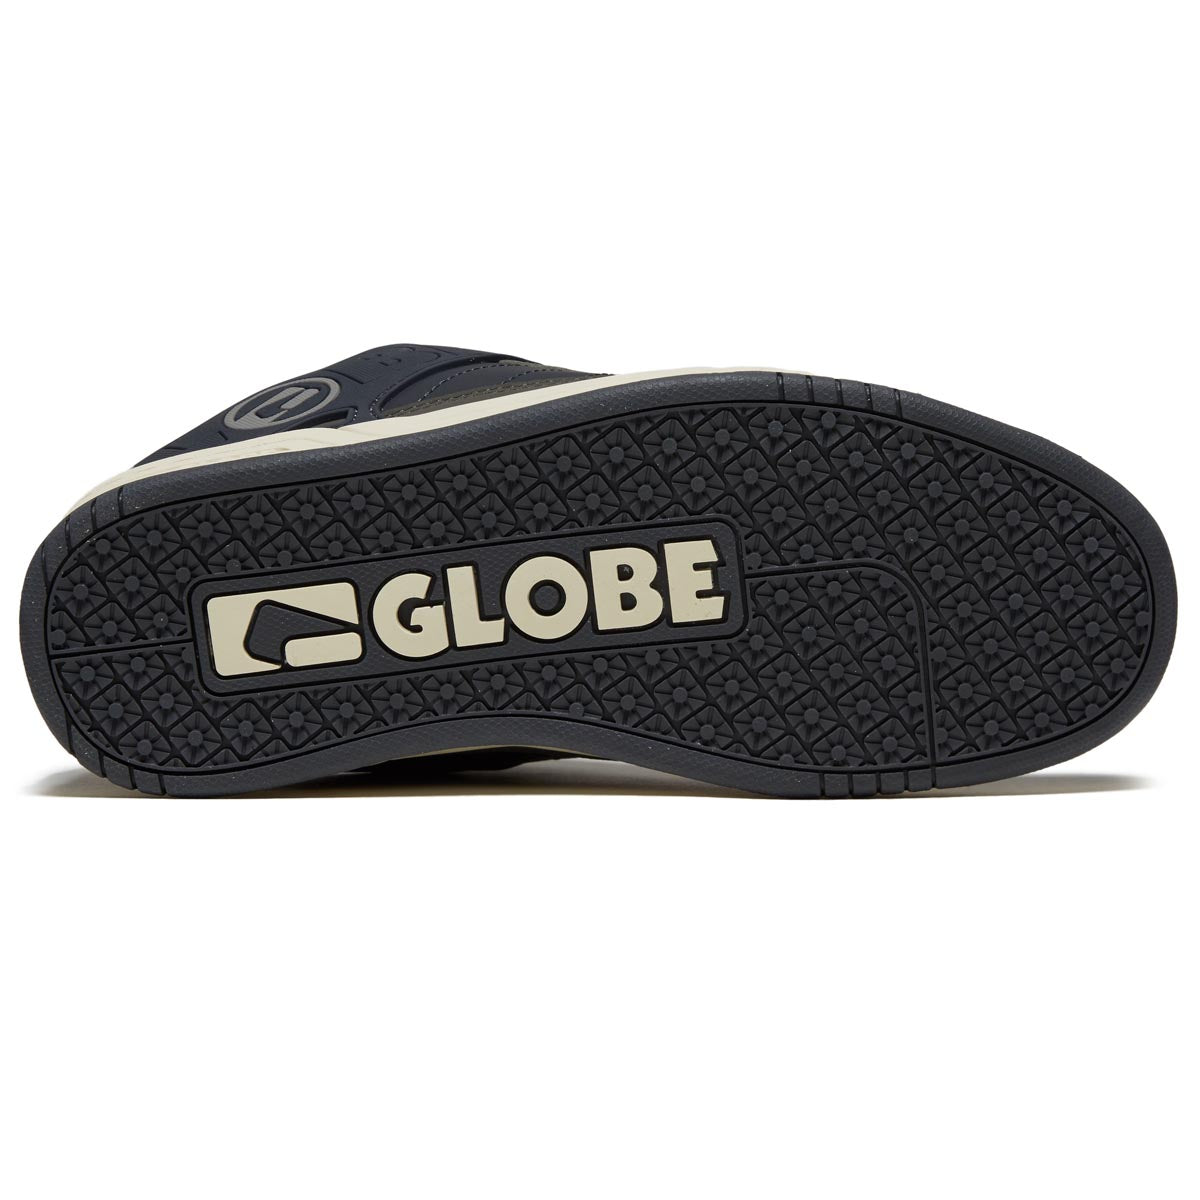 Globe Tilt Shoes - Ebony/Charcoal image 4